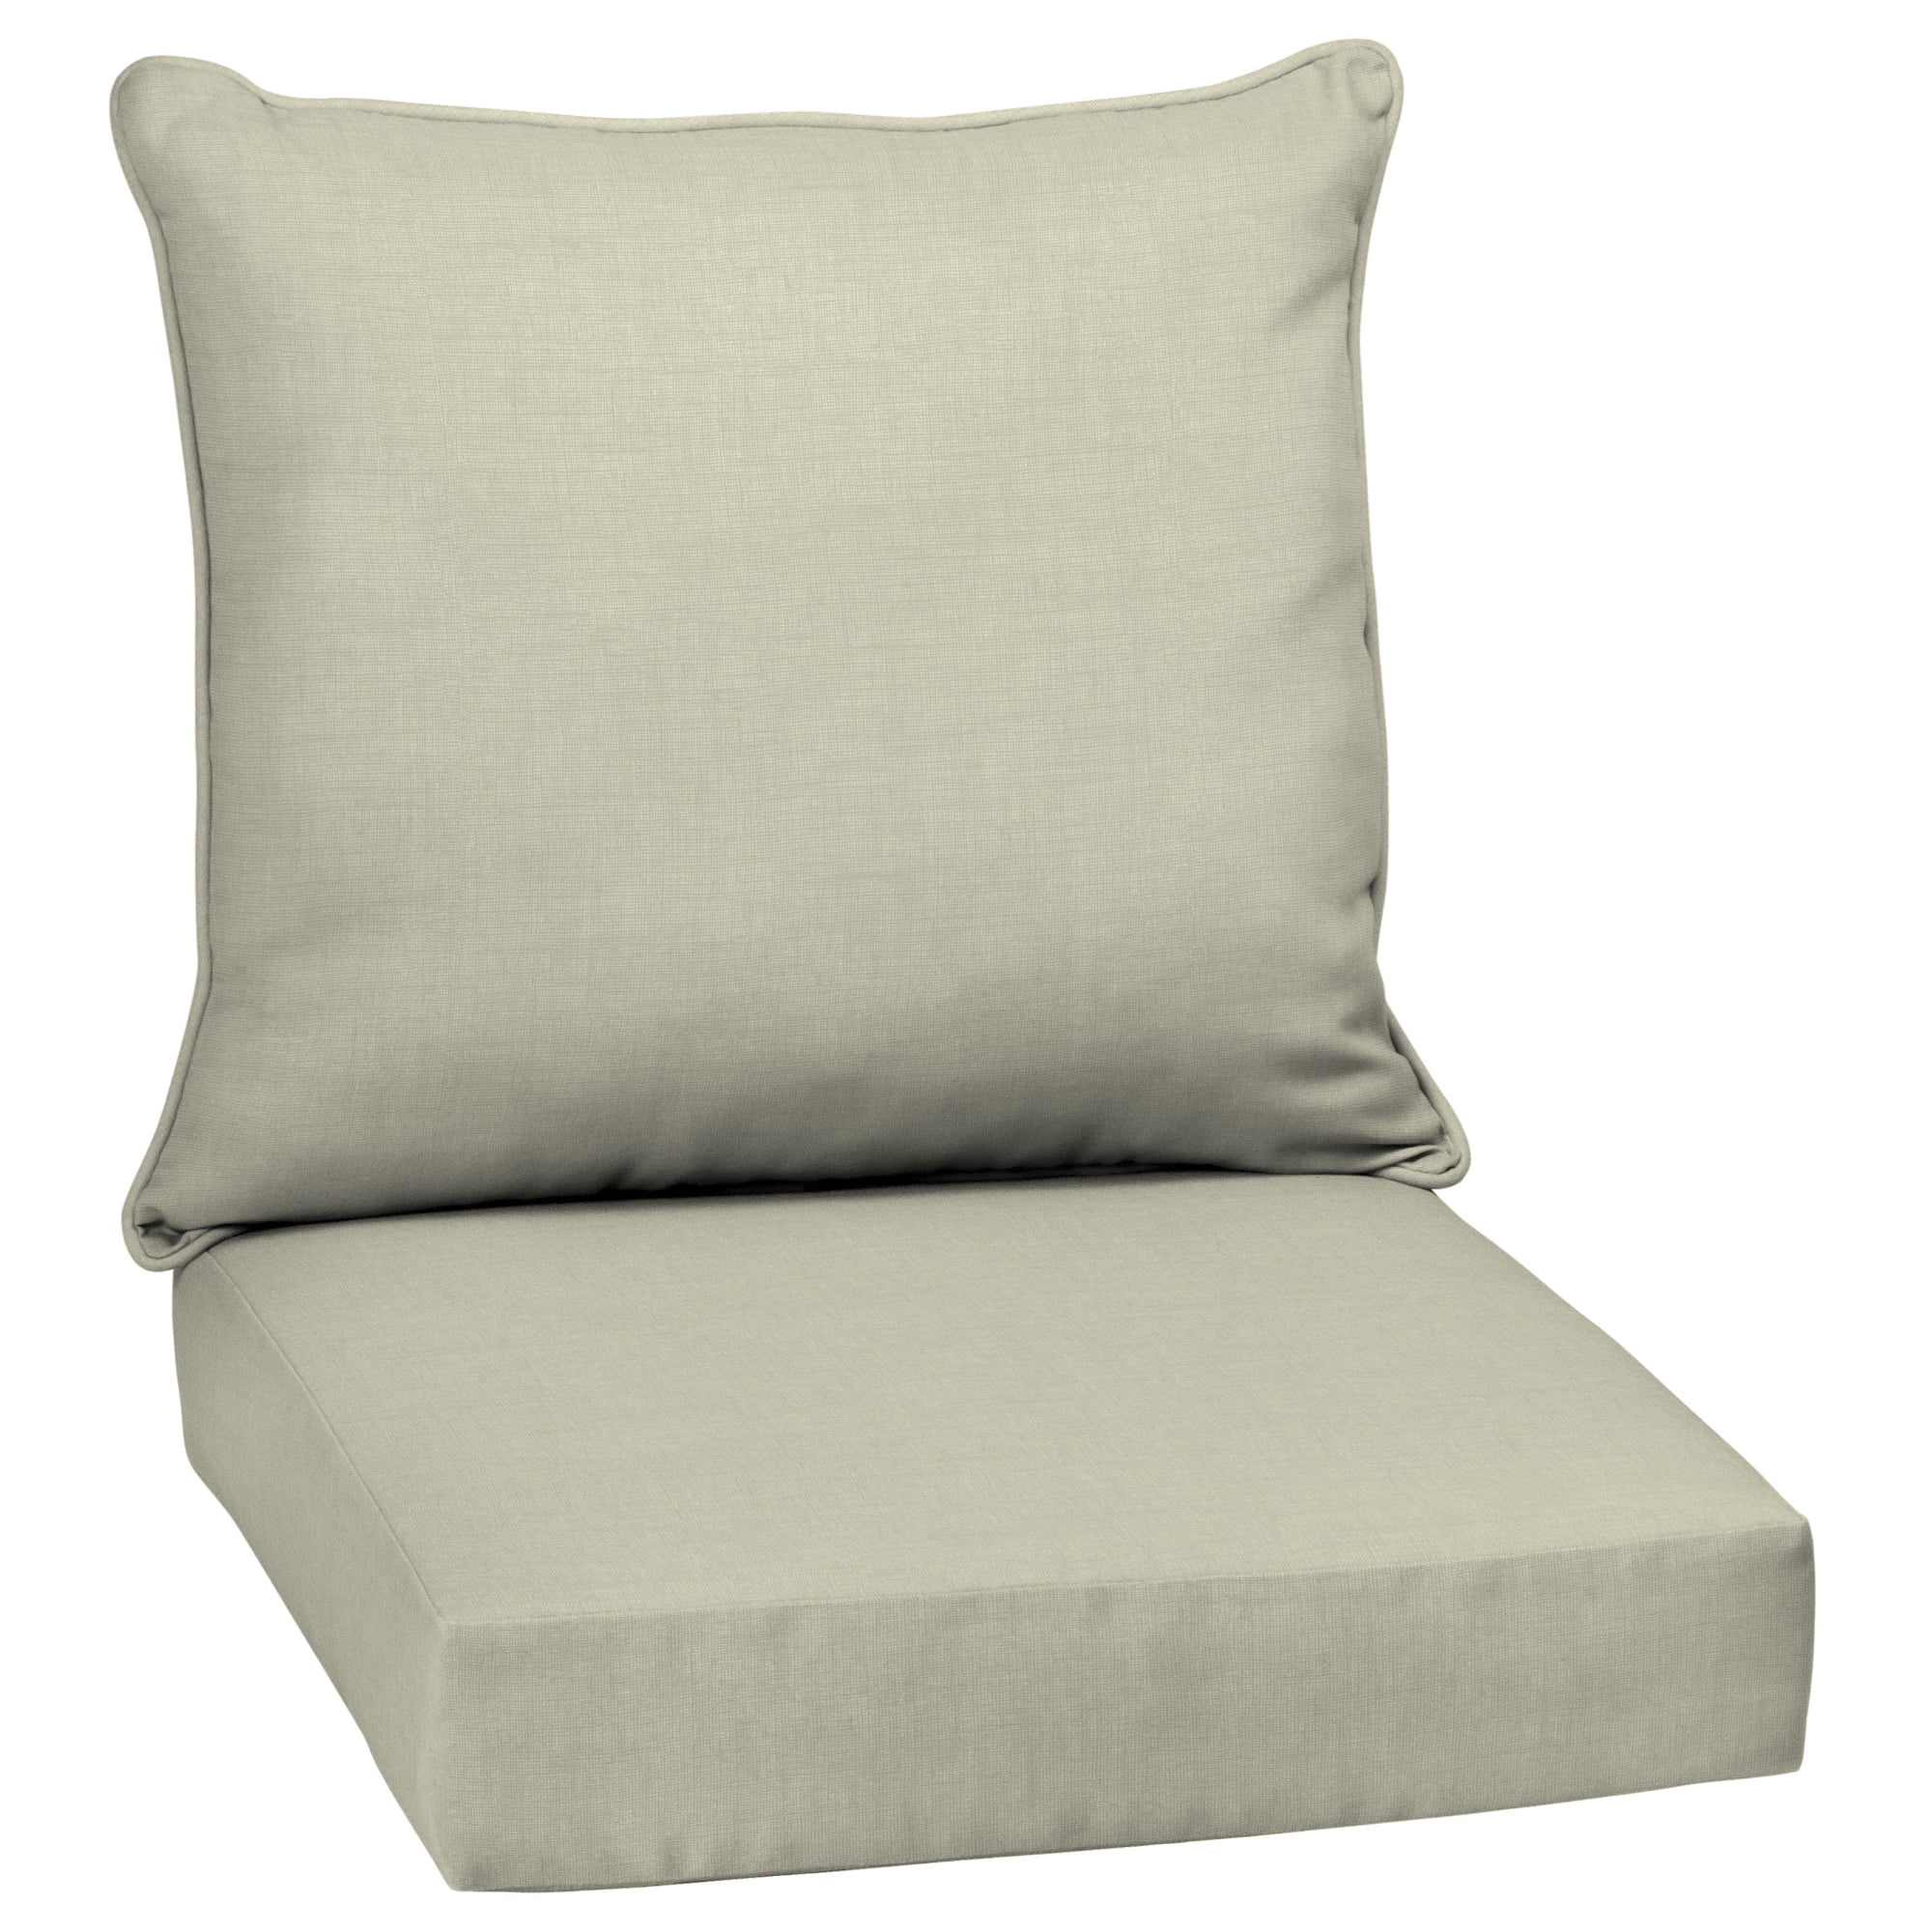 24x24 outdoor cushions